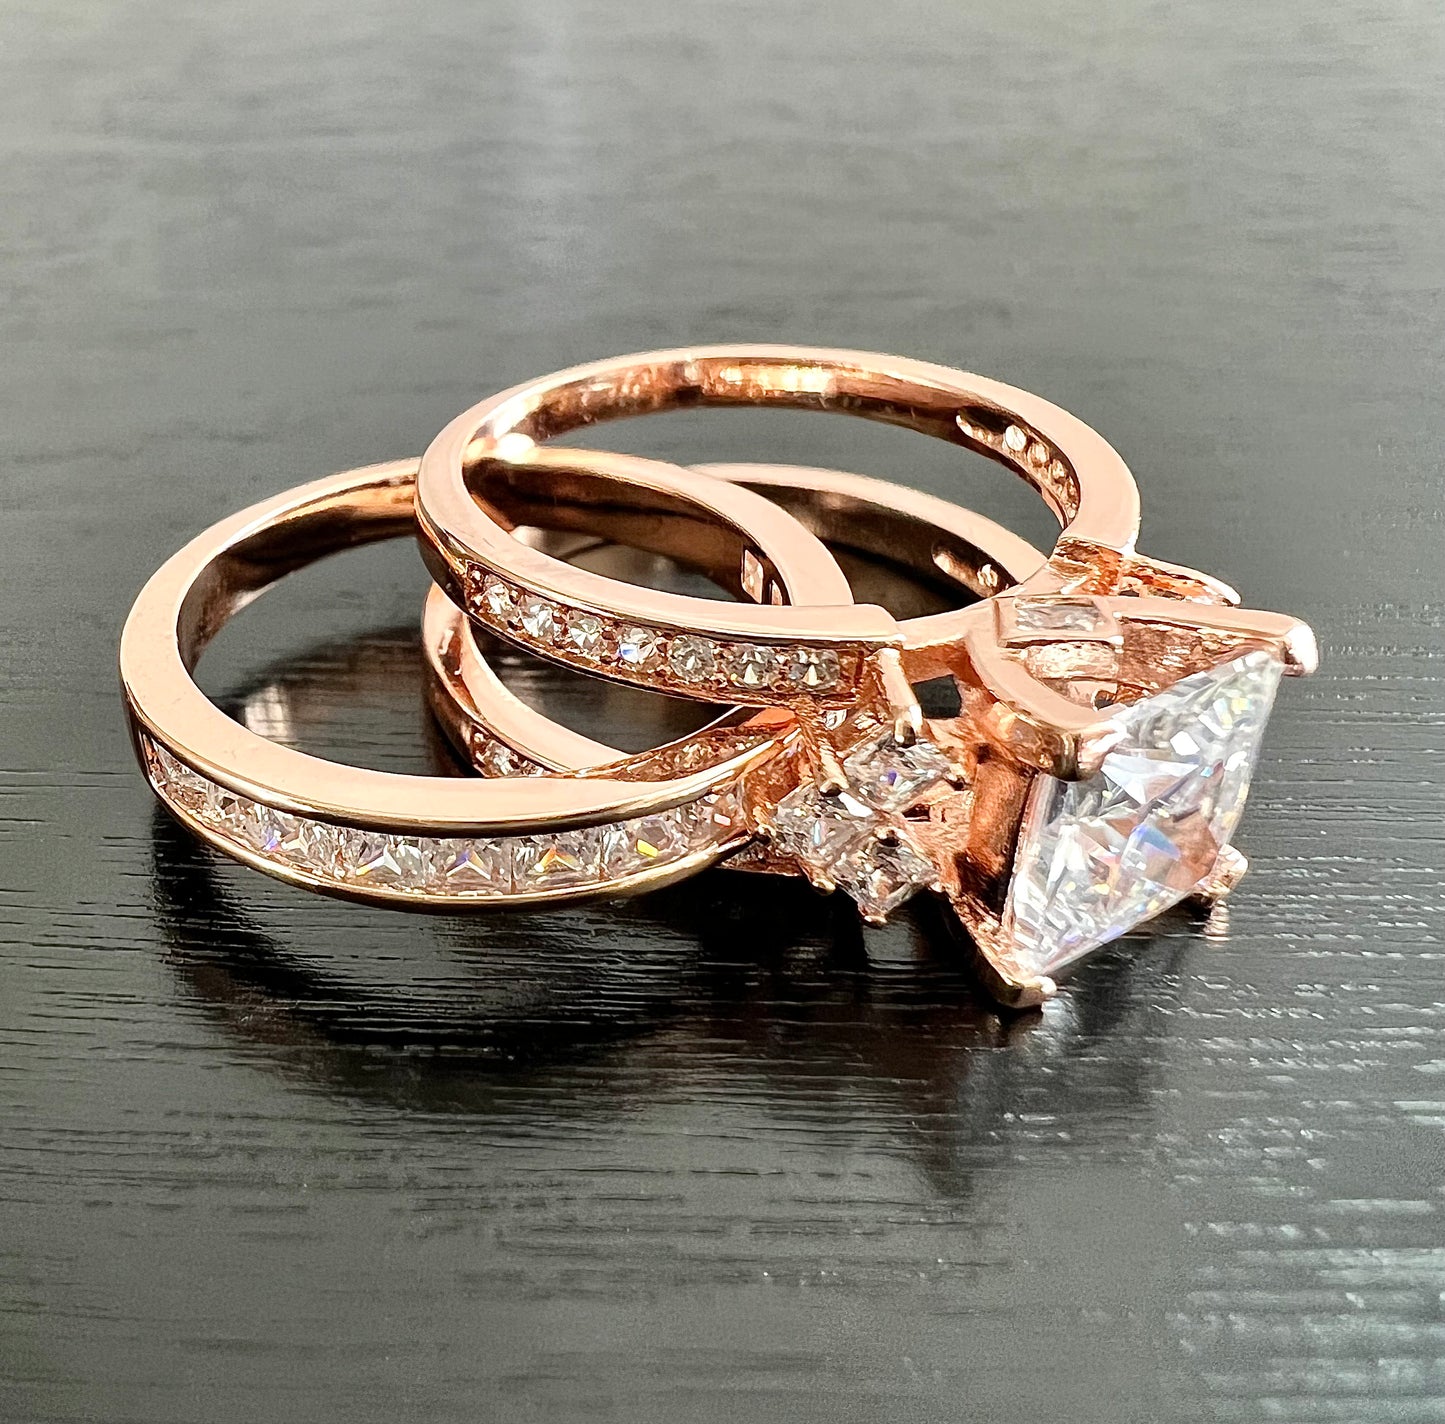 Princess Cut, Diamond CZ Engagement / Wedding Tri Band Ring on 18K Rose Gold